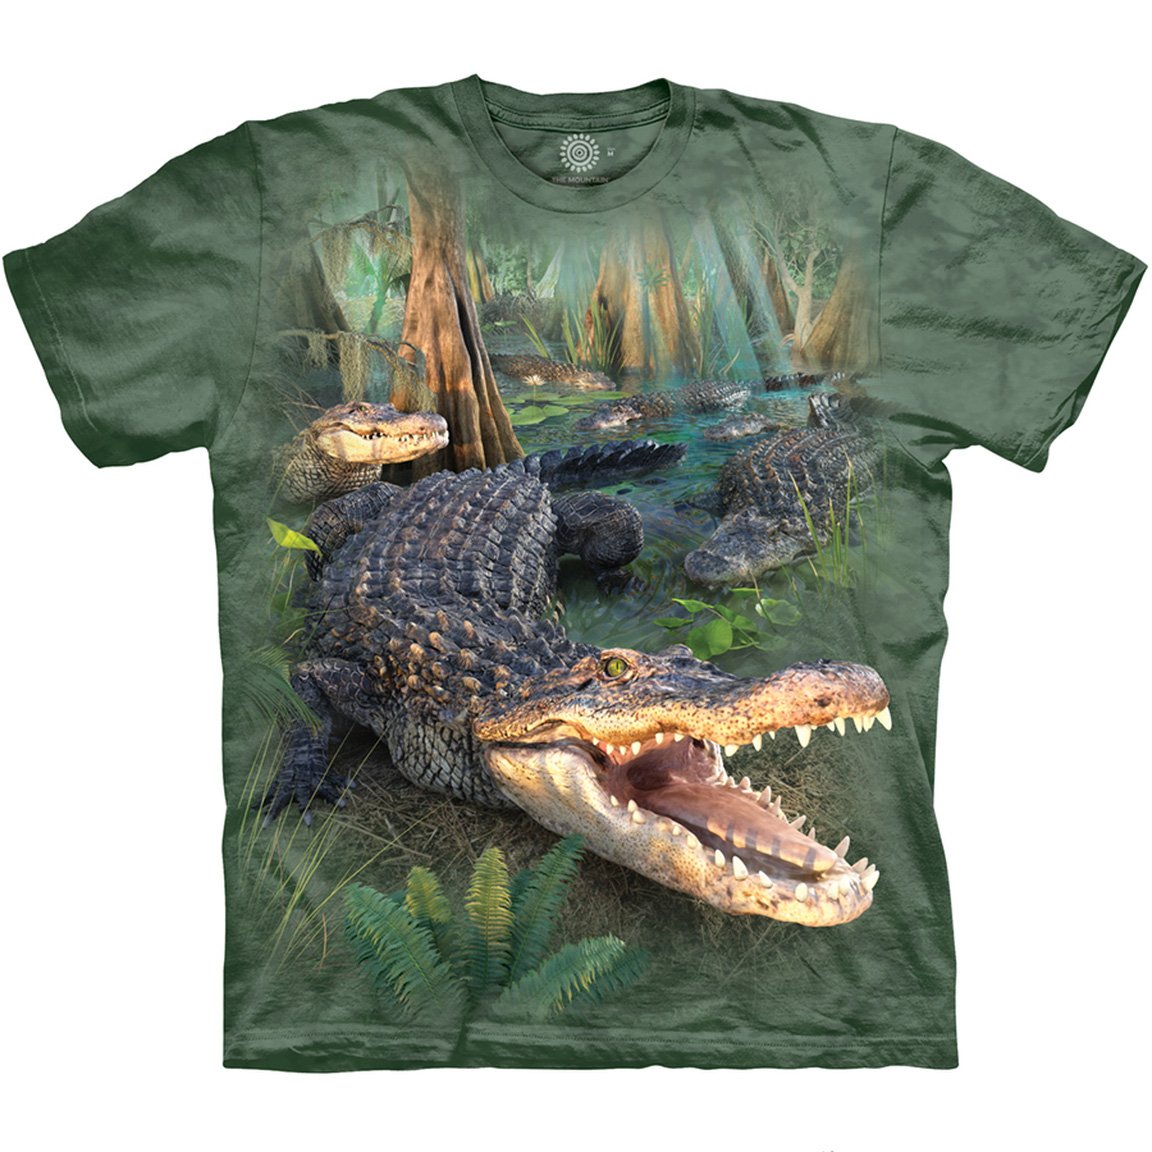 The Mountain Gator Parade - T-Shirt